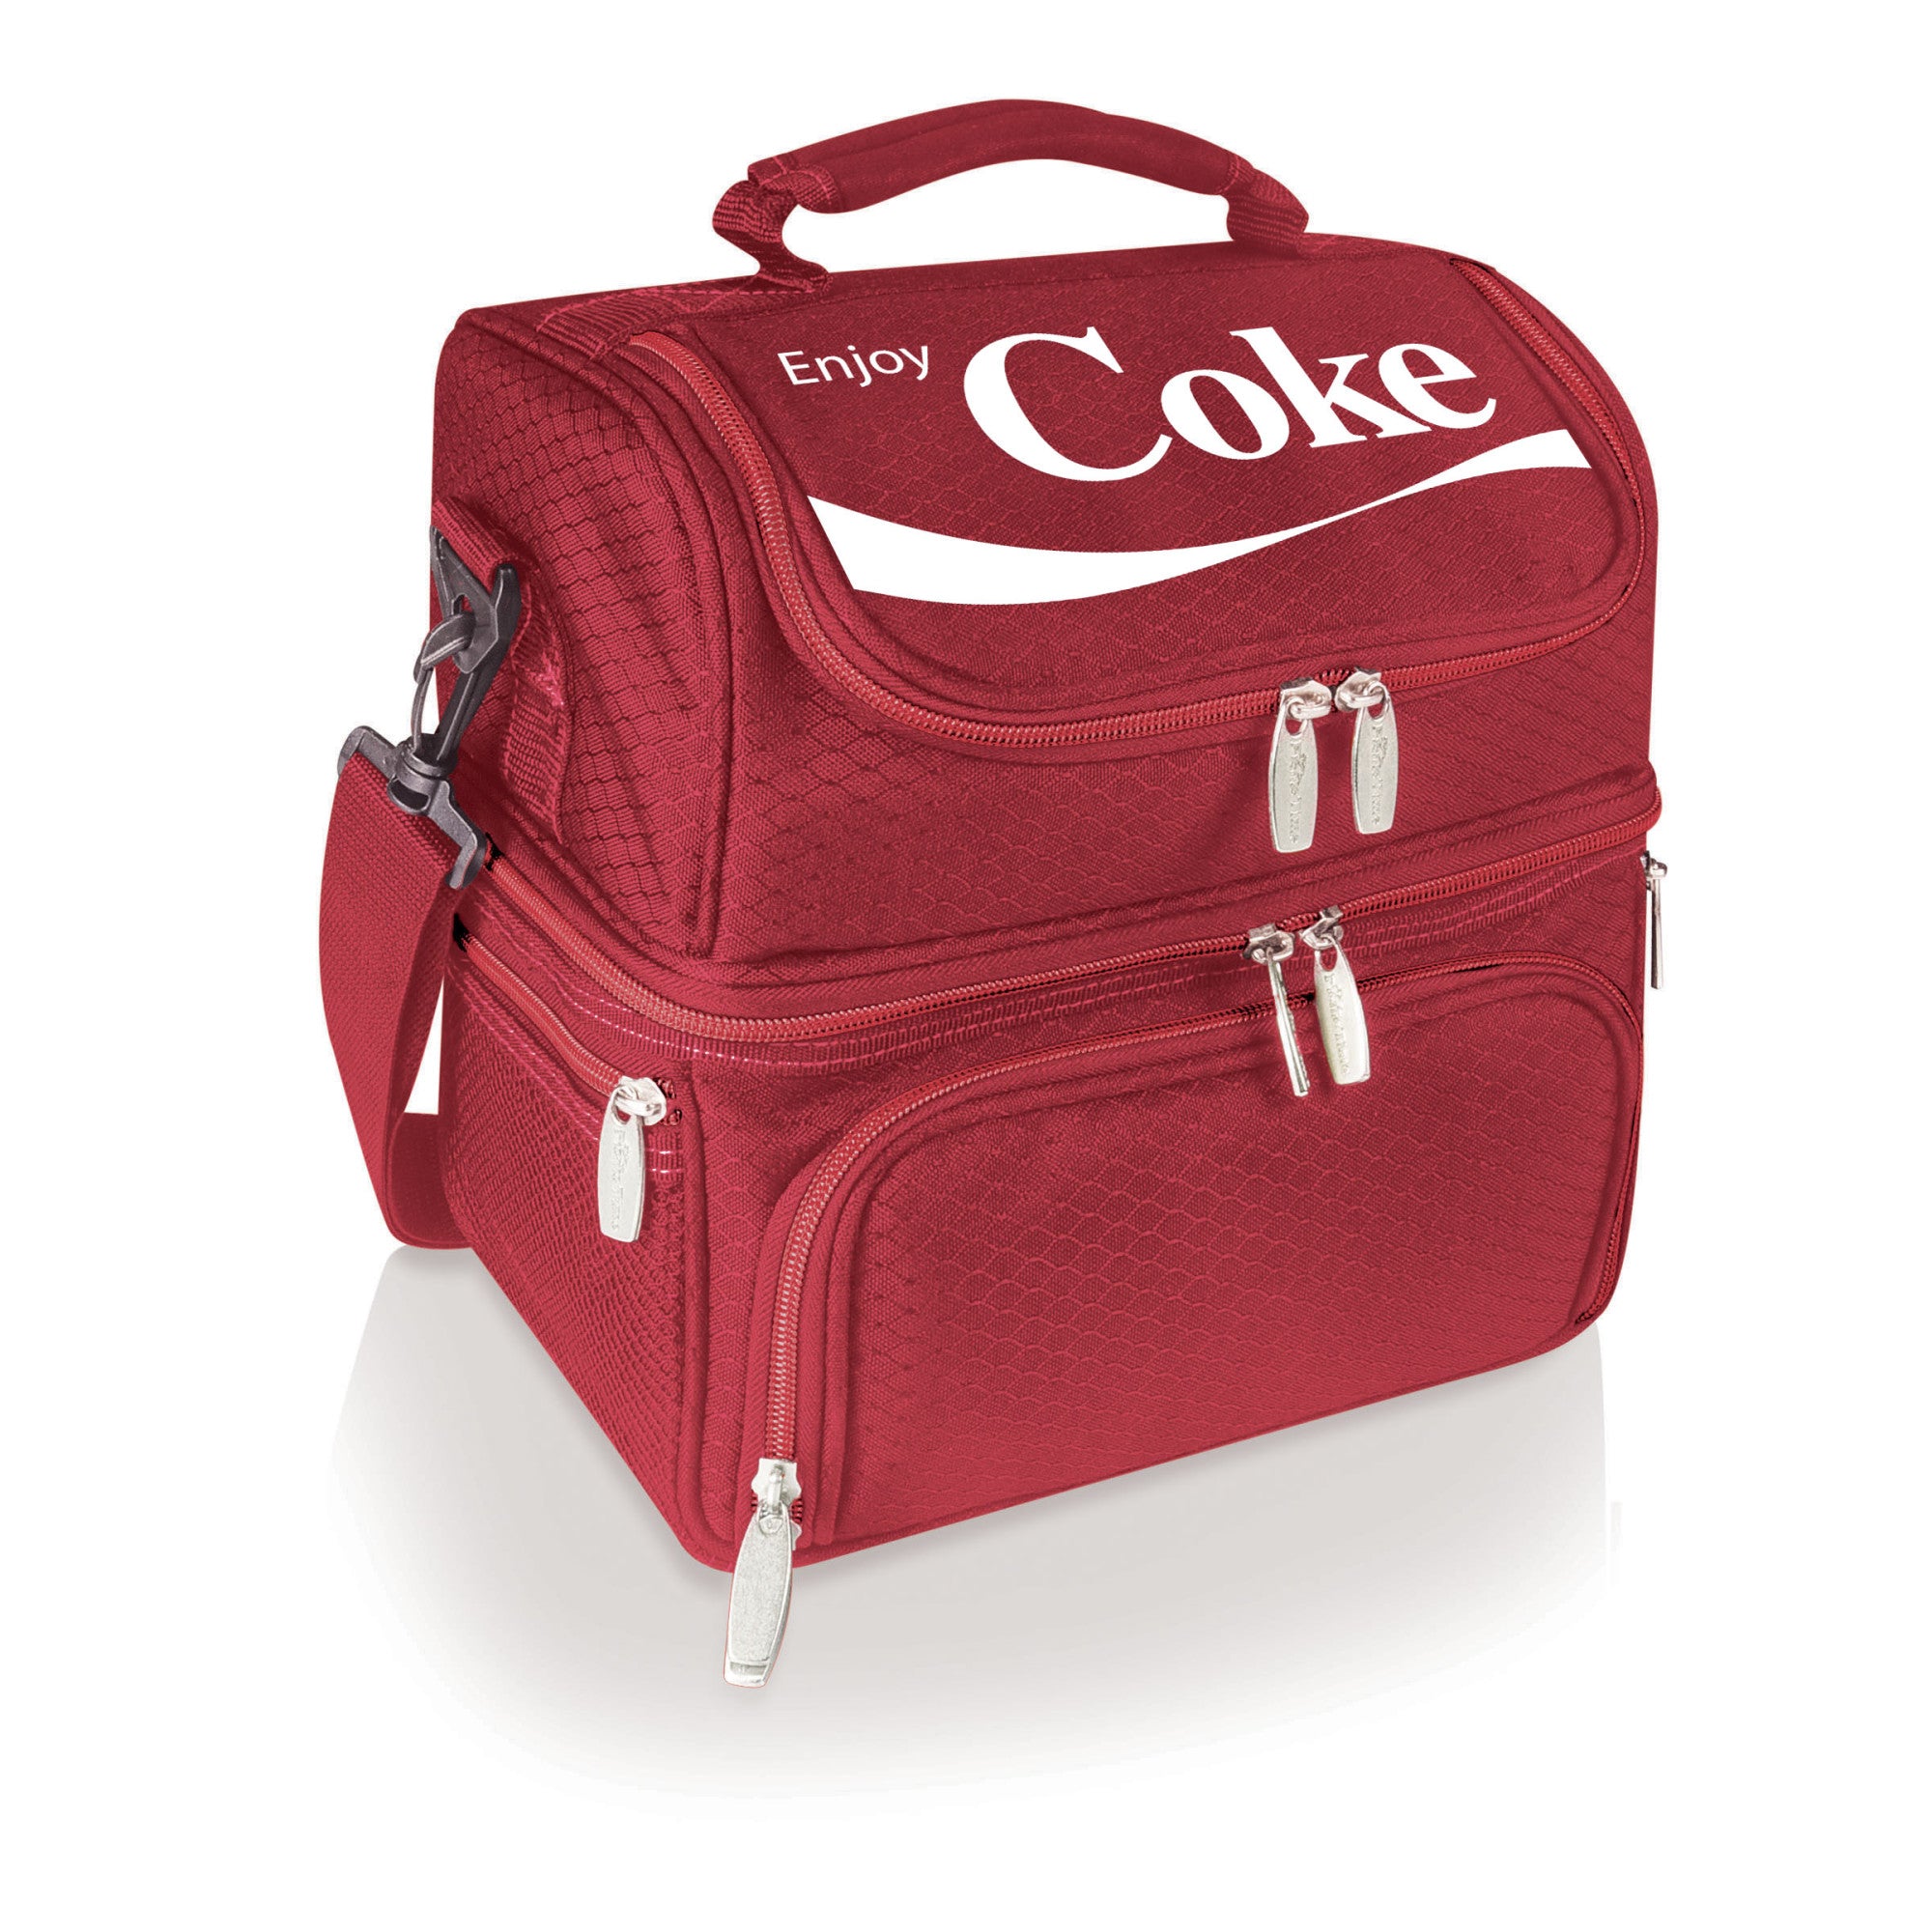 Coca-Cola Enjoy Coke - Pranzo Lunch Bag Cooler with Utensils